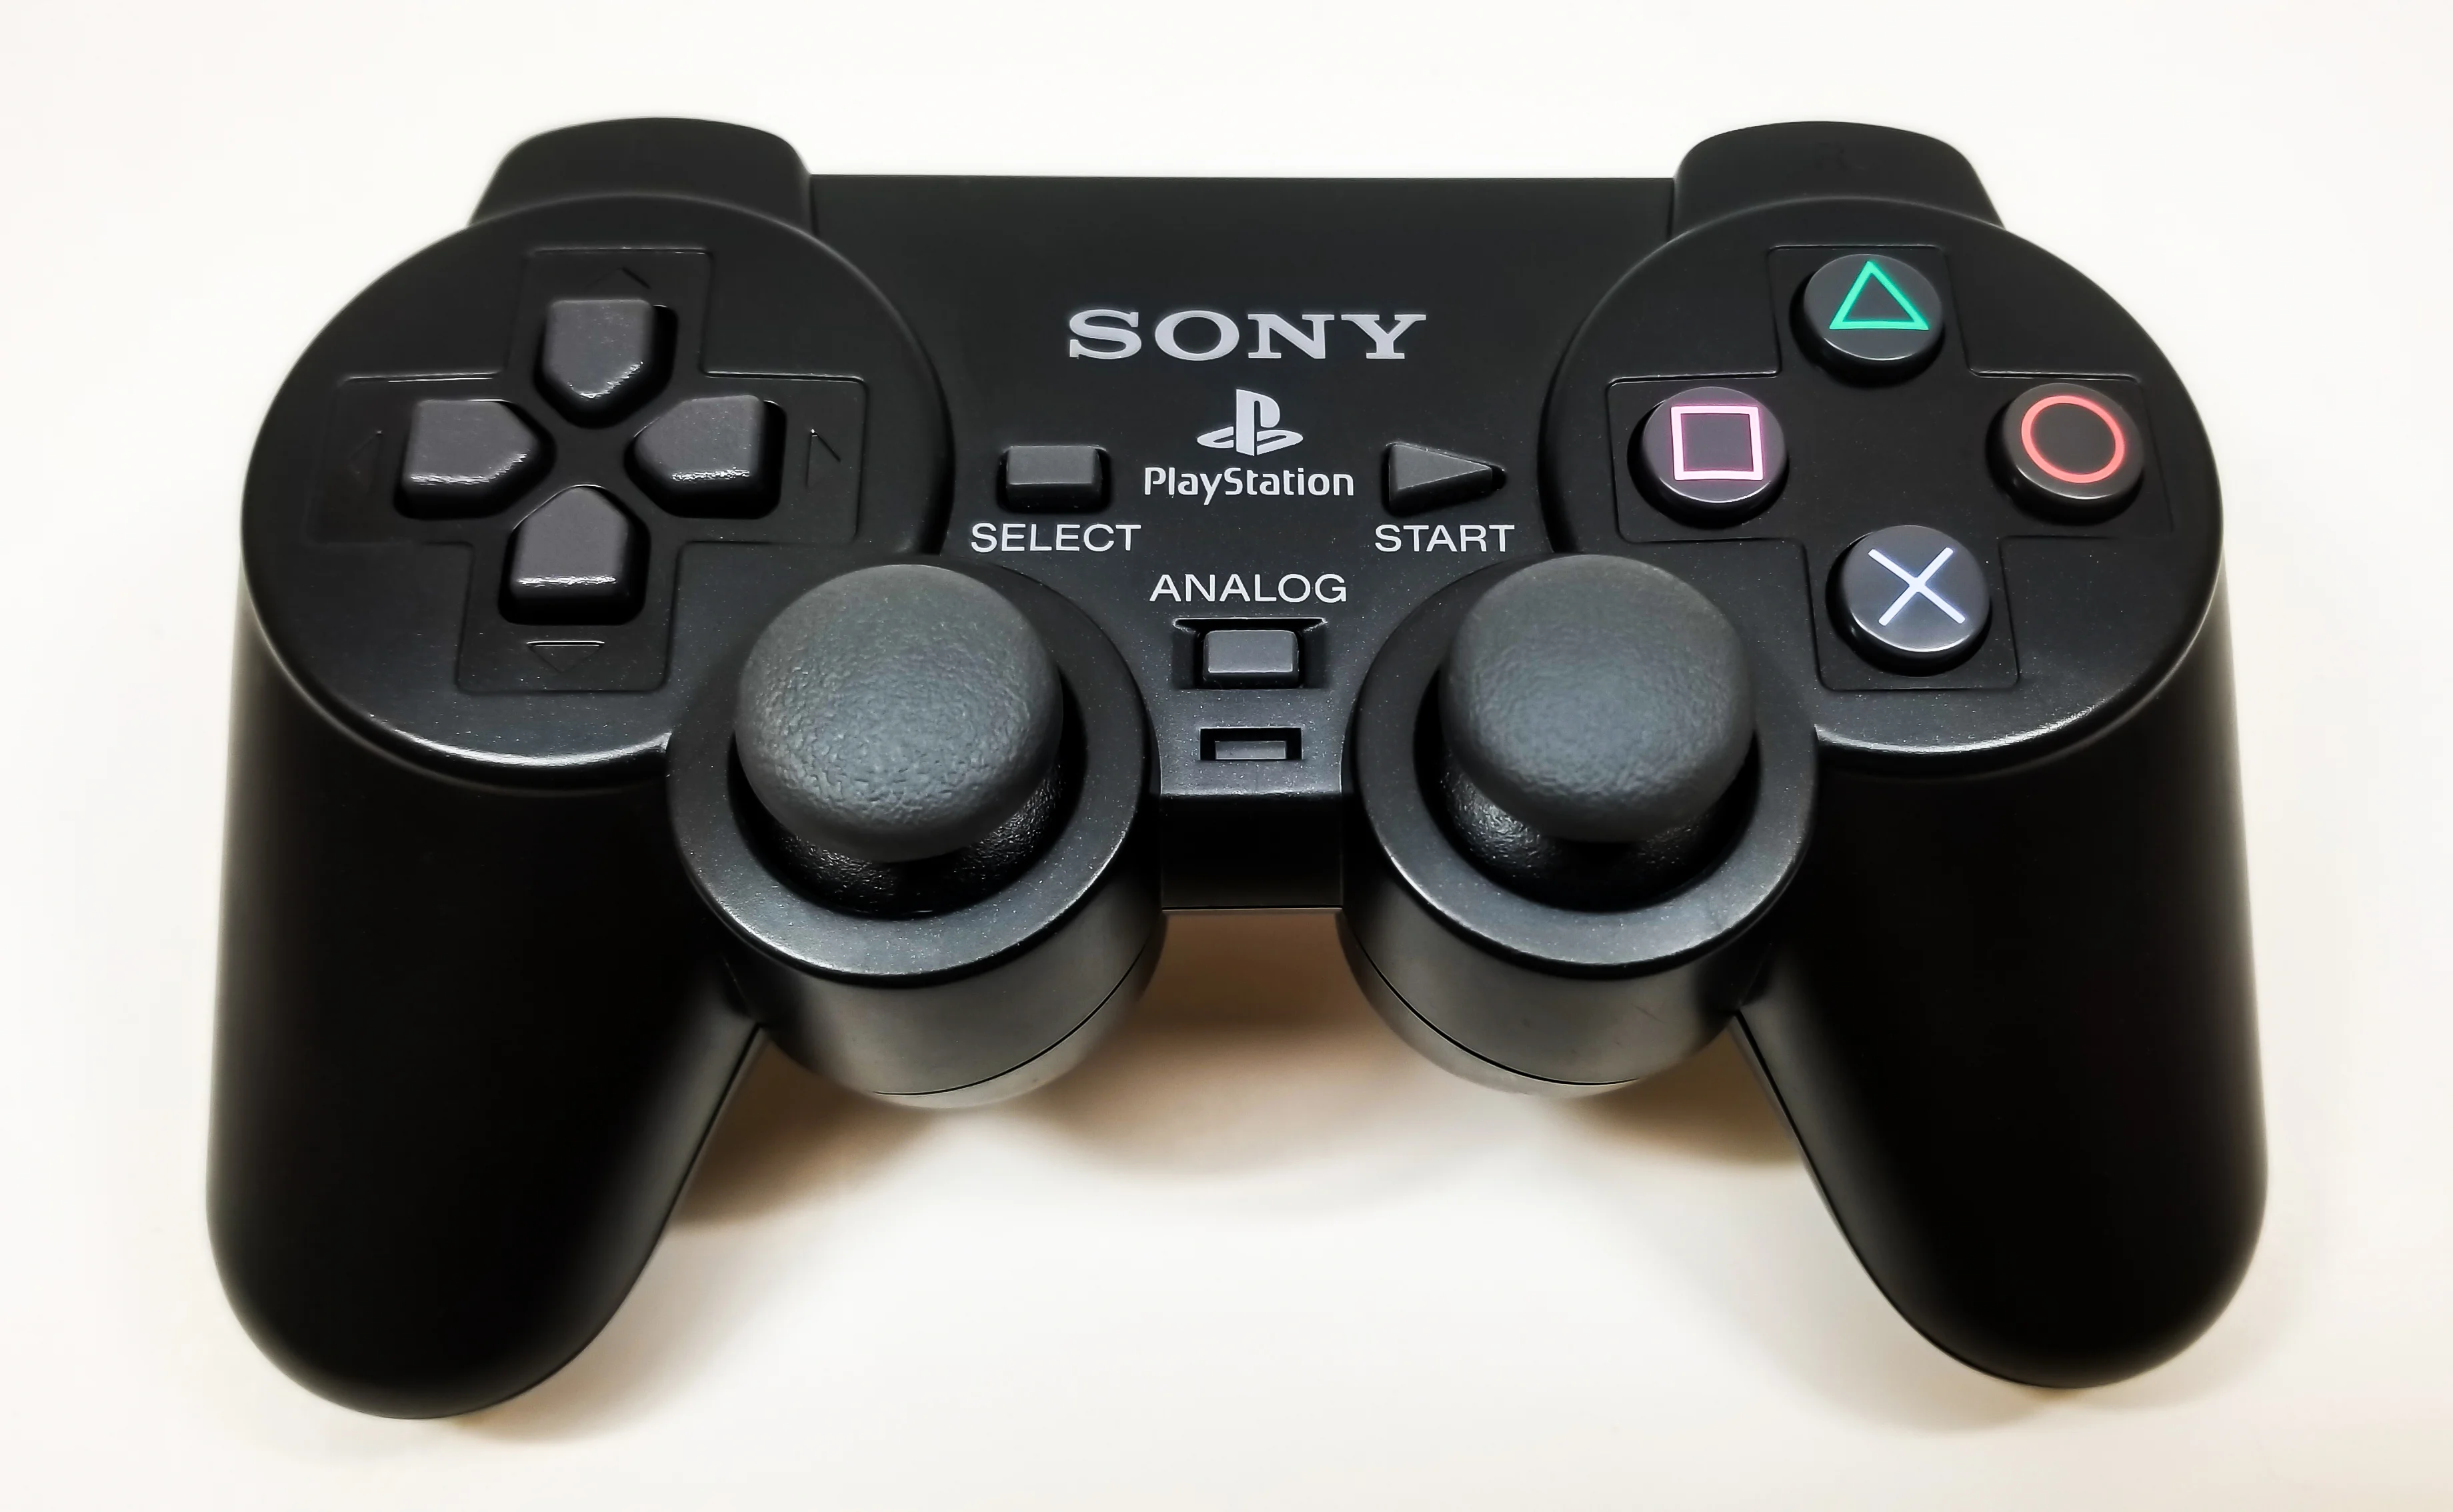  Sony PlayStation 3 Alpha Rev 3 Prototype Controller